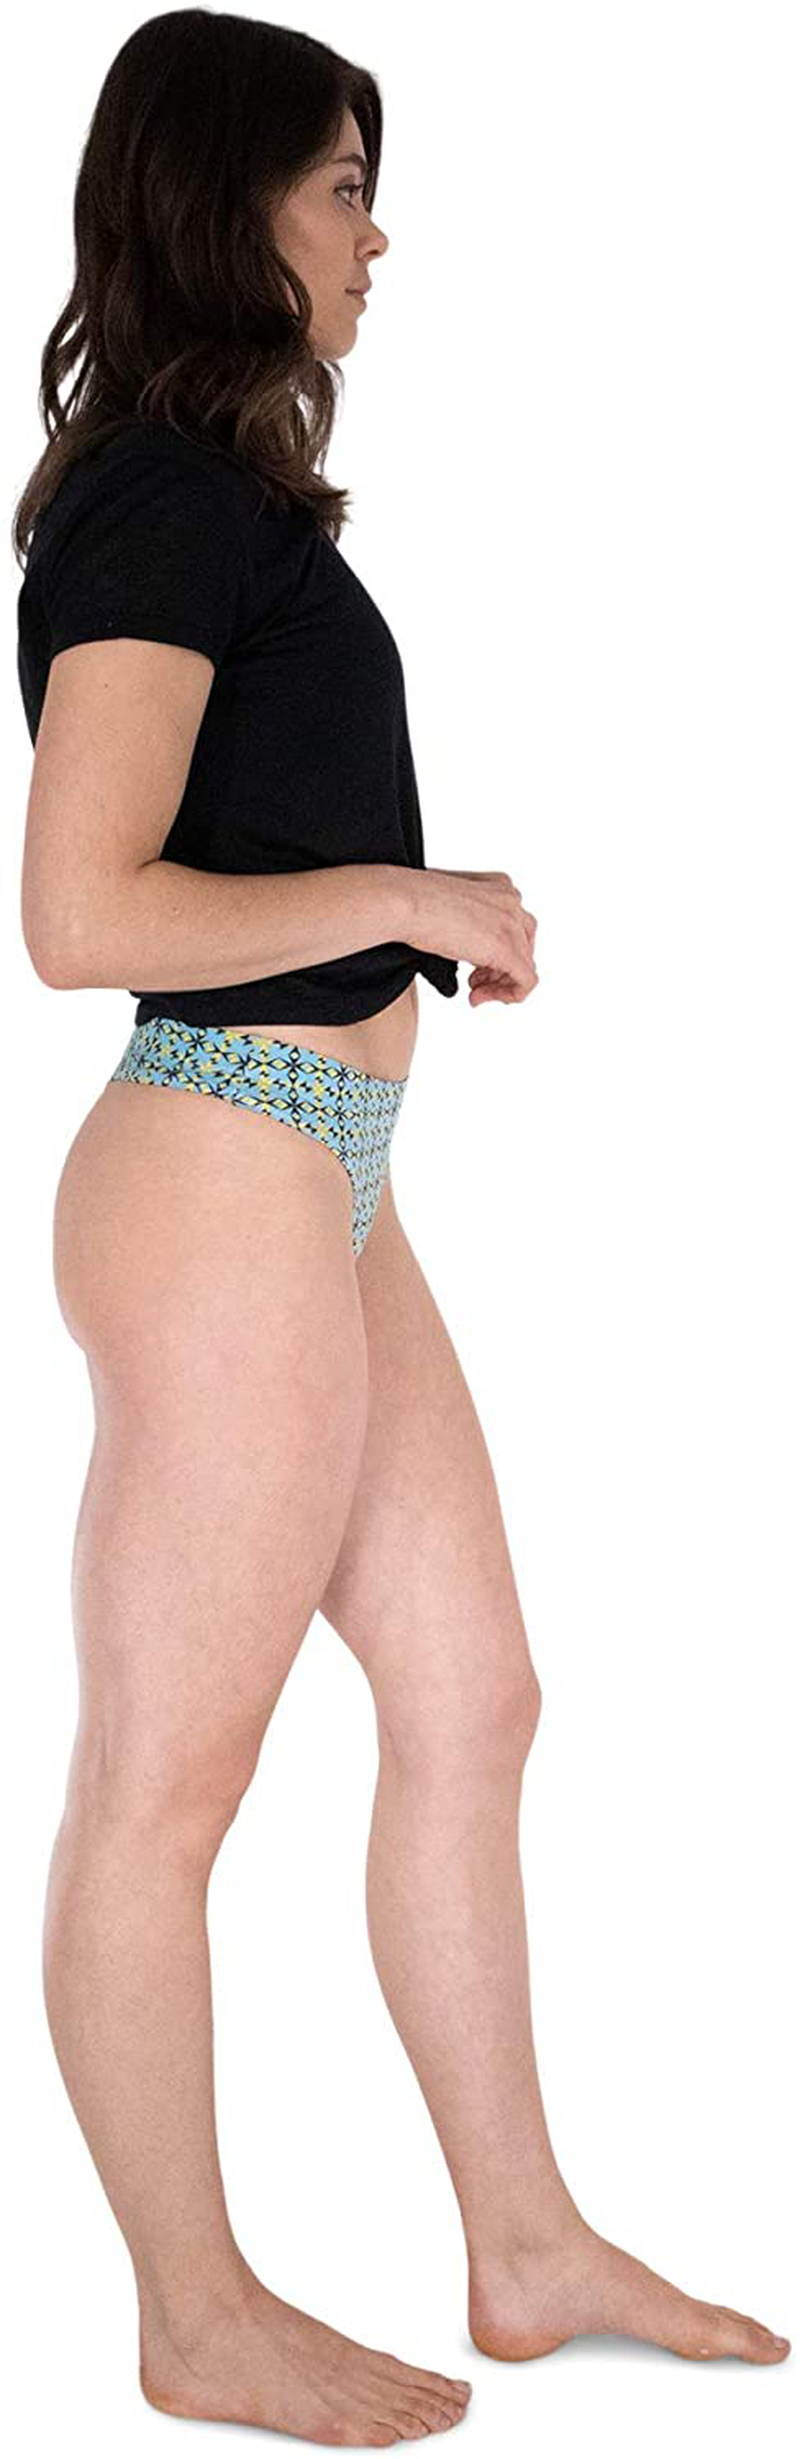 Sexy Basics Women's 6-Pack Active Sport Thong Buttery Soft Panties Underwear